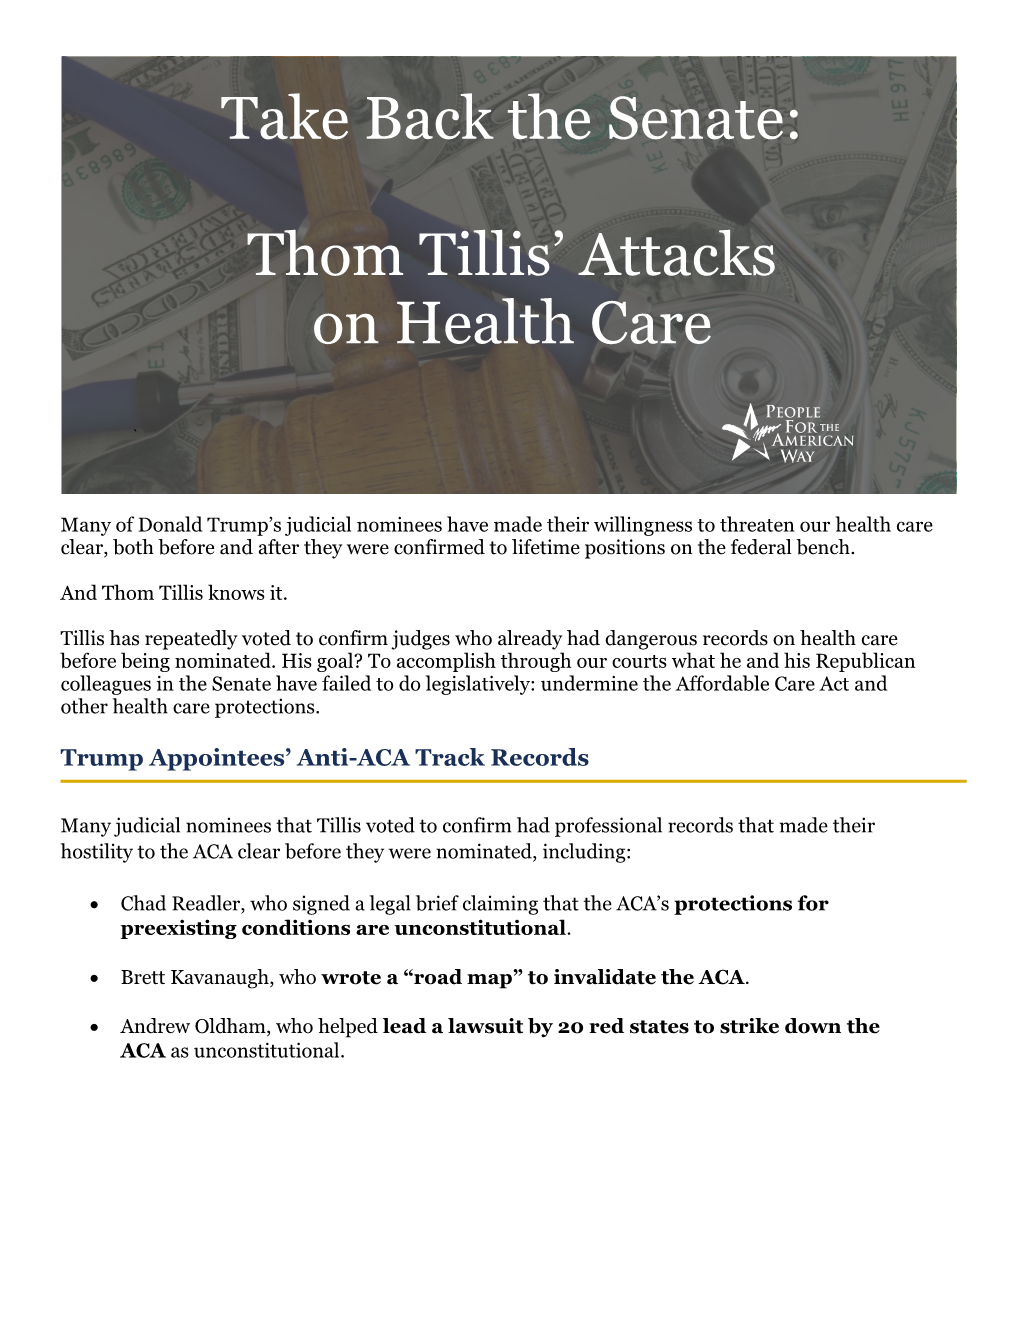 Thom Tillis' Attacks on Health Care